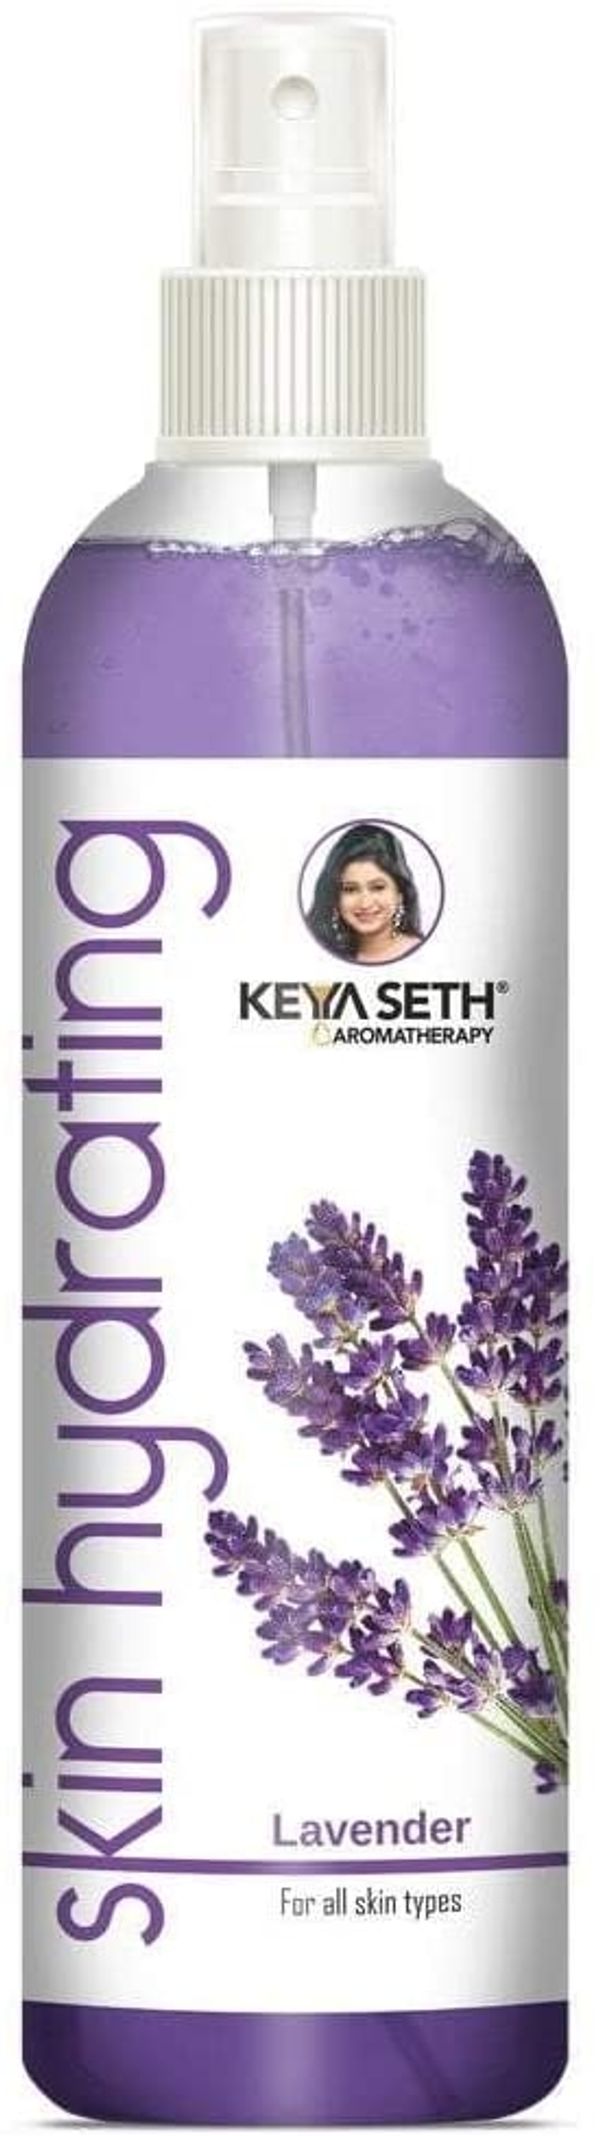 Keya Seth Aromatherapy Skin Hydrating Lavender Toner 200ml